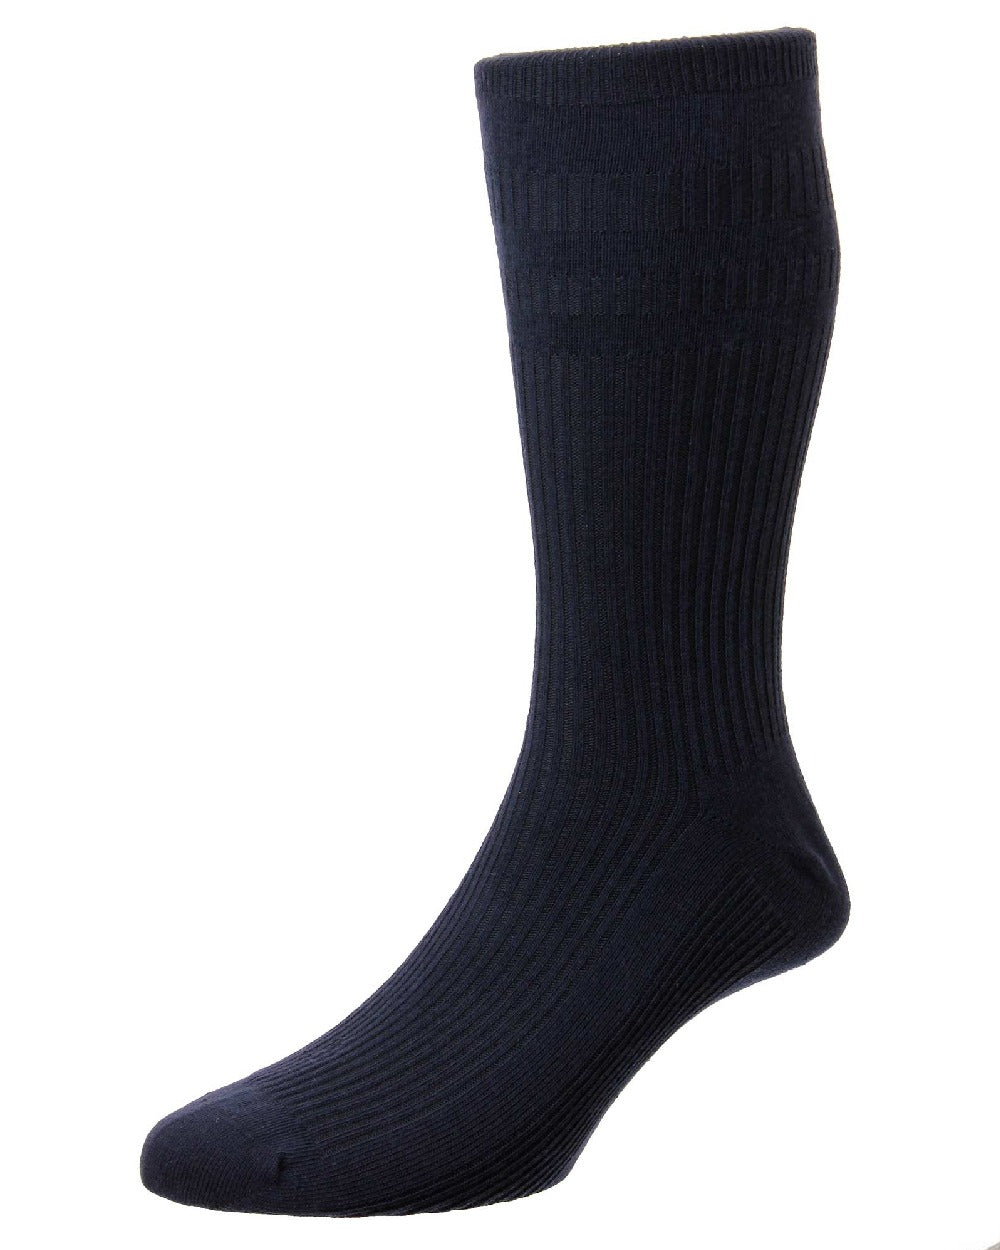 HJ Hall Original Cotton Soft Top Socks in Dark Navy 